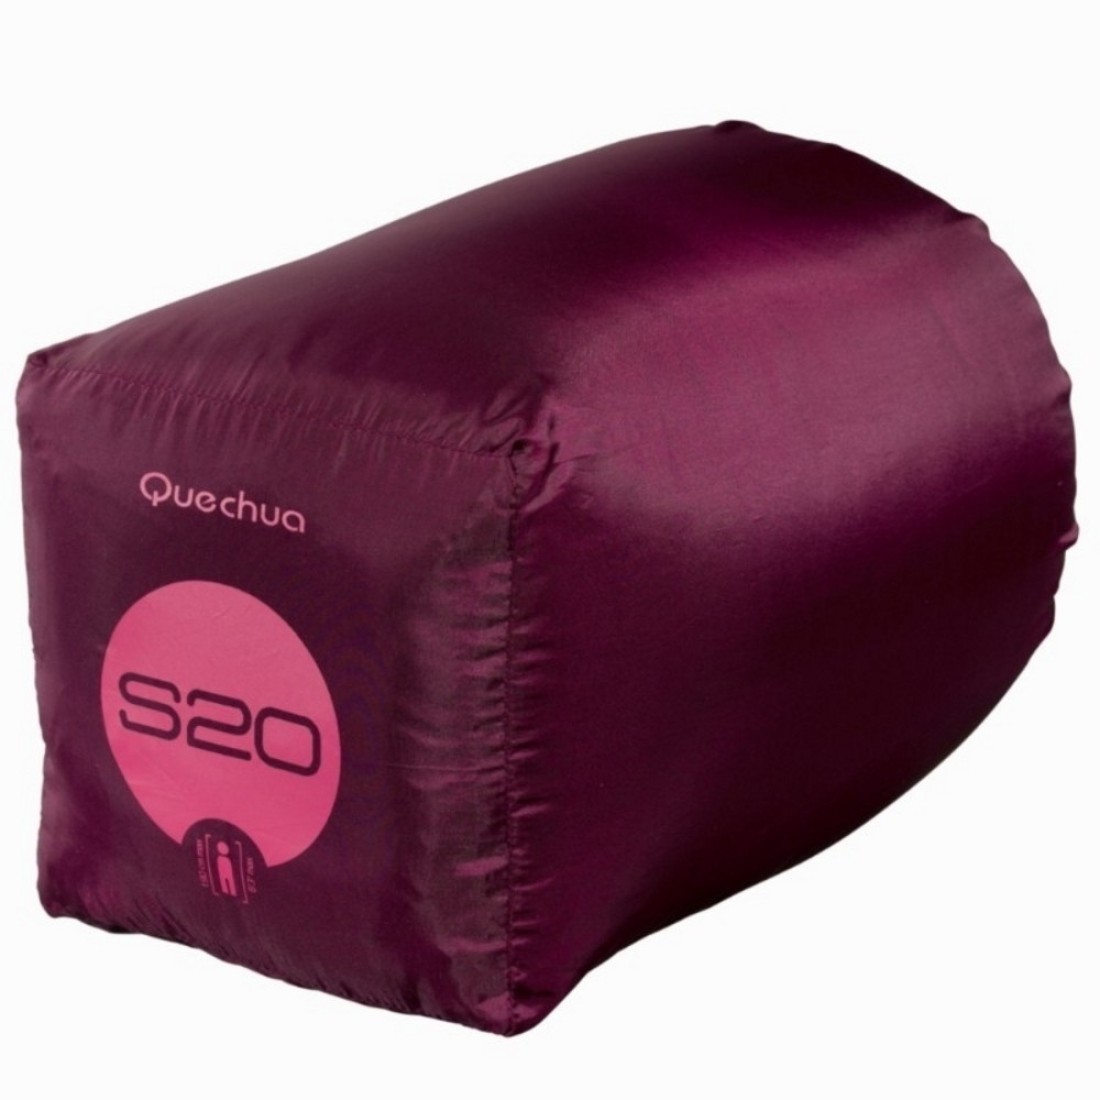 quechua s20 basic sleeping bag